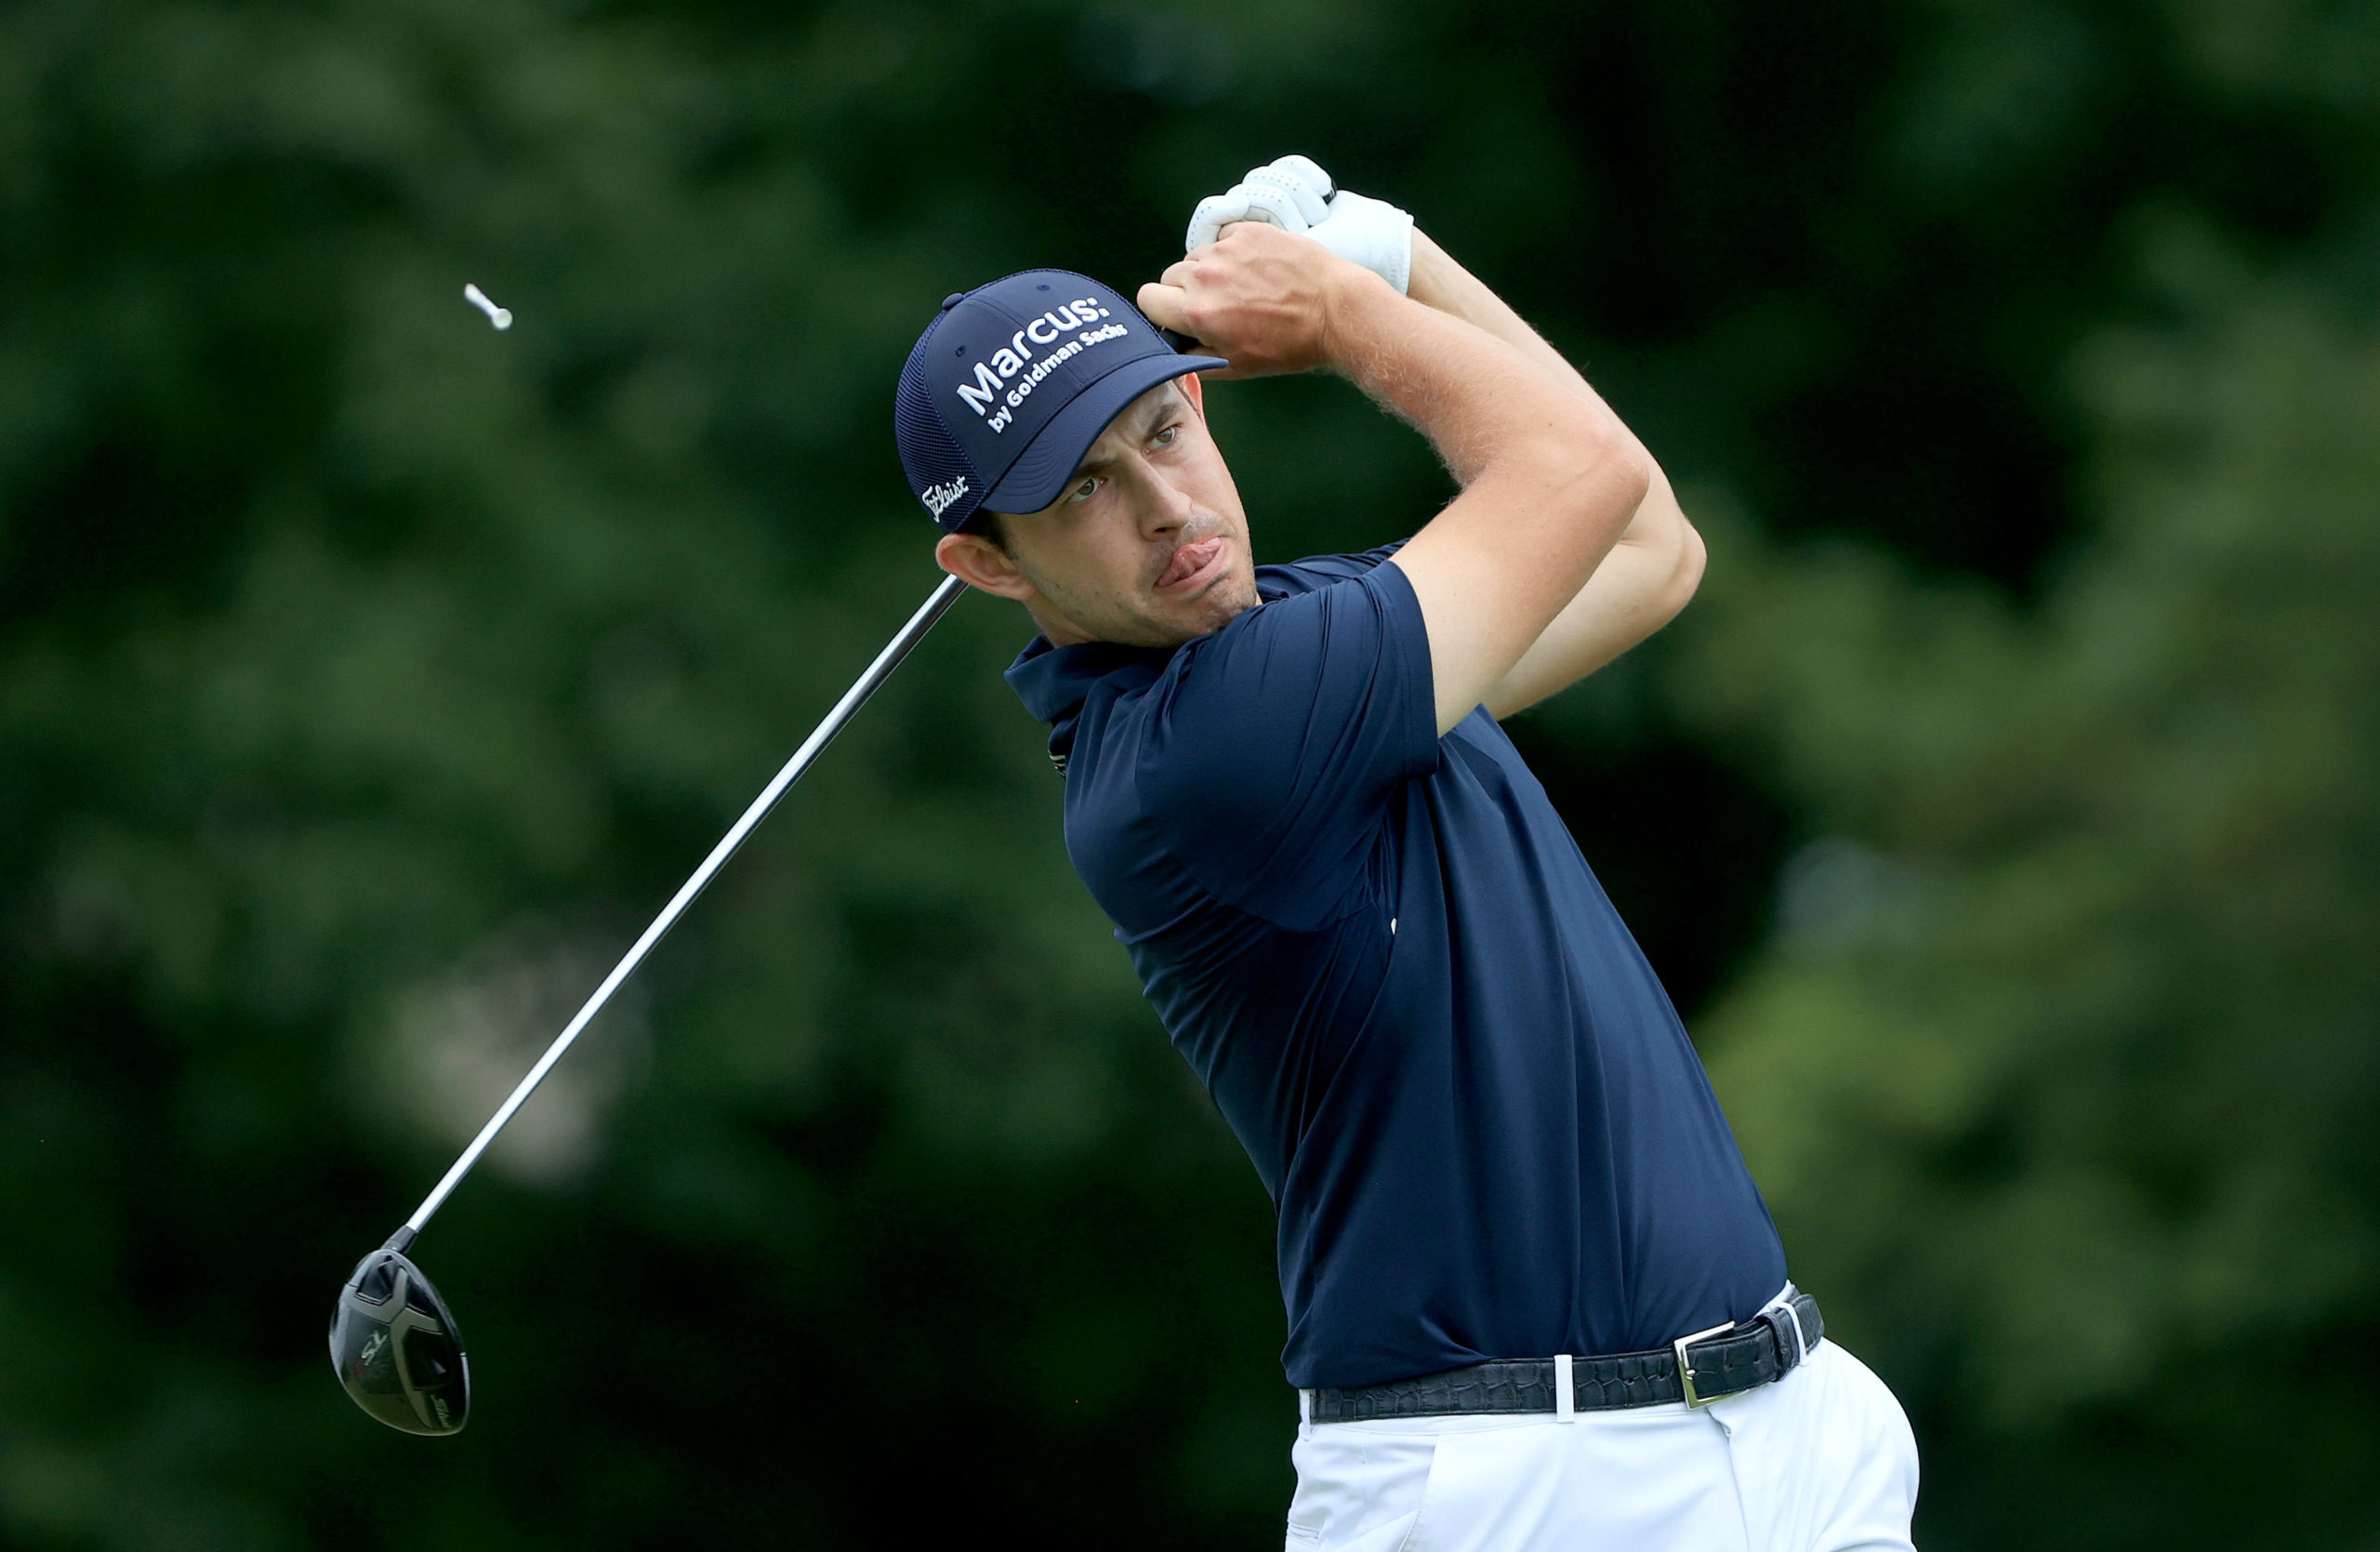 Goldman Sachs pronounces its first sports activities endorsement with PGA Tour